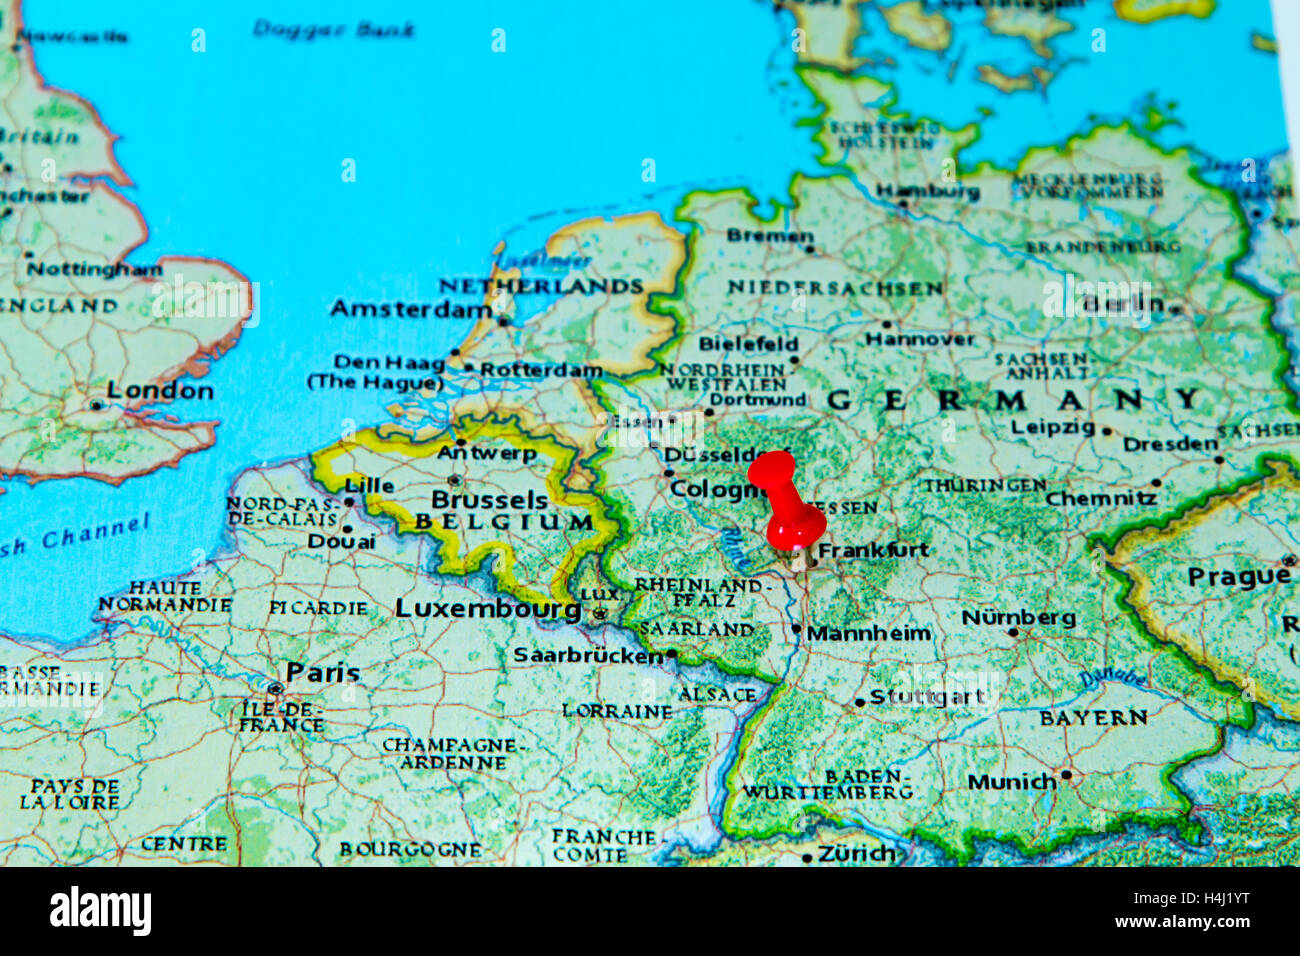 Frankfurt Germany Pinned On A Map Of Europe Stock Photo Alamy